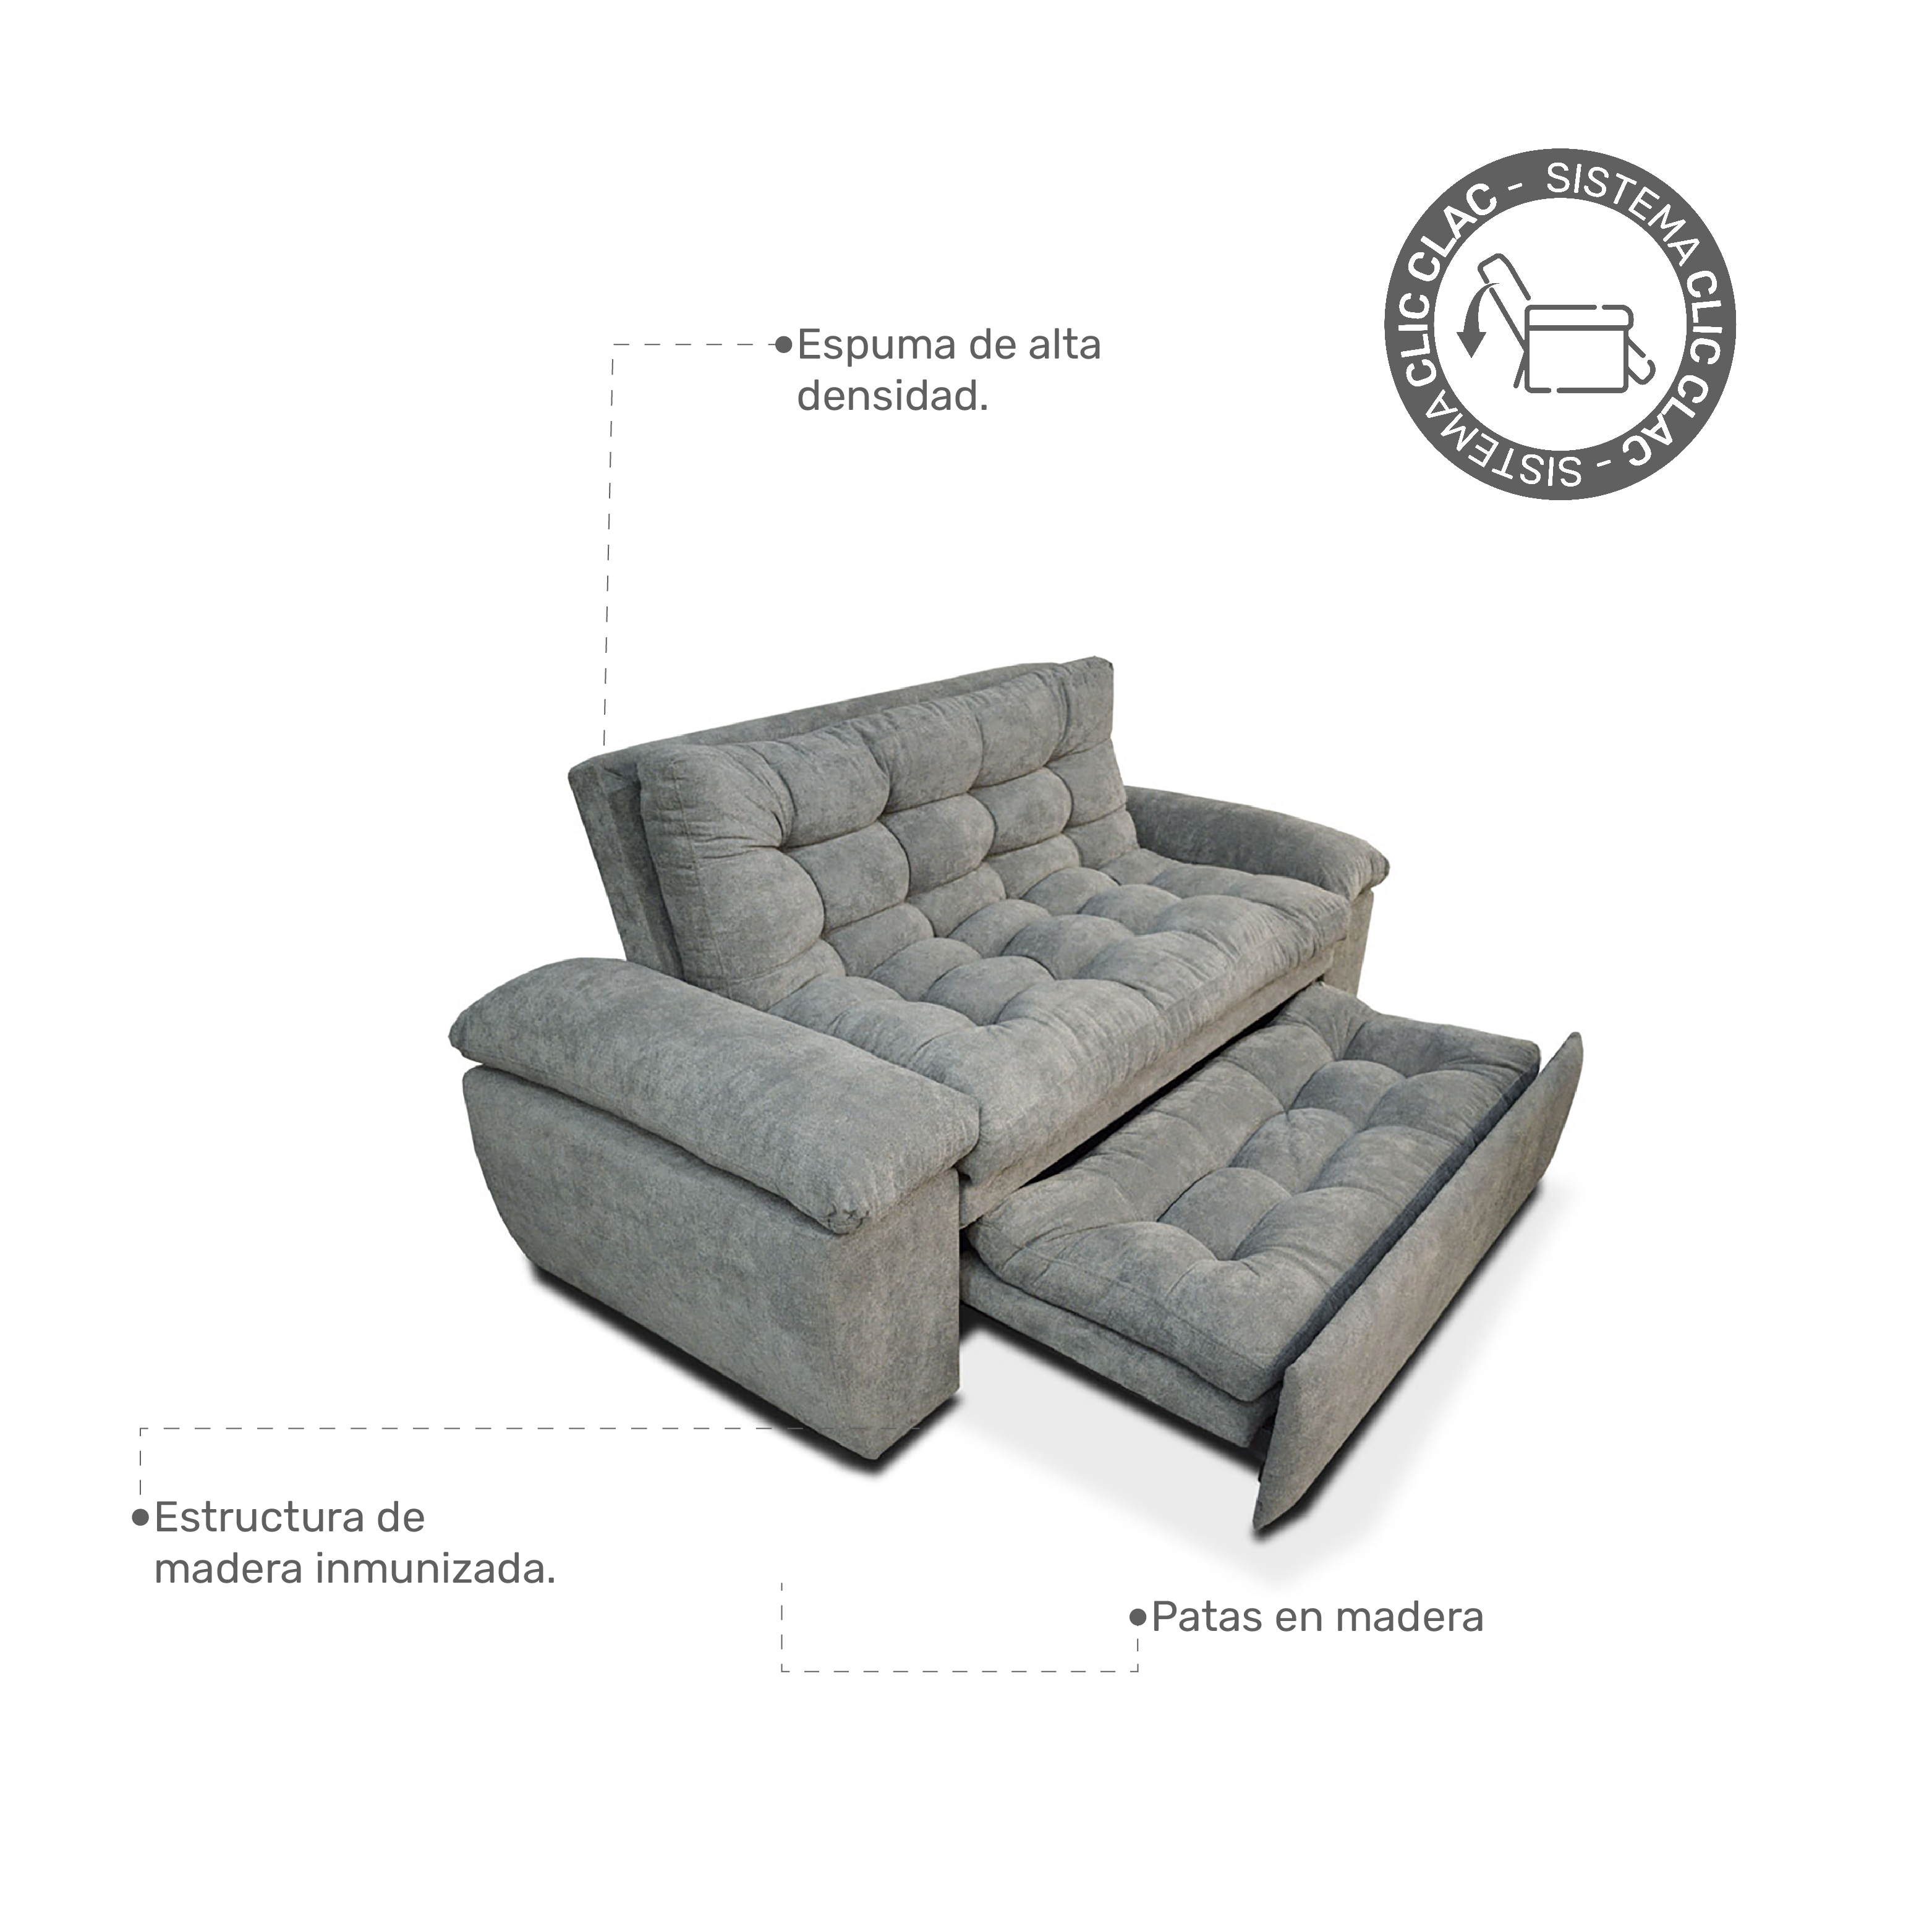 Sofa Cama Comfort Sistema clic clac en gris - Agaval